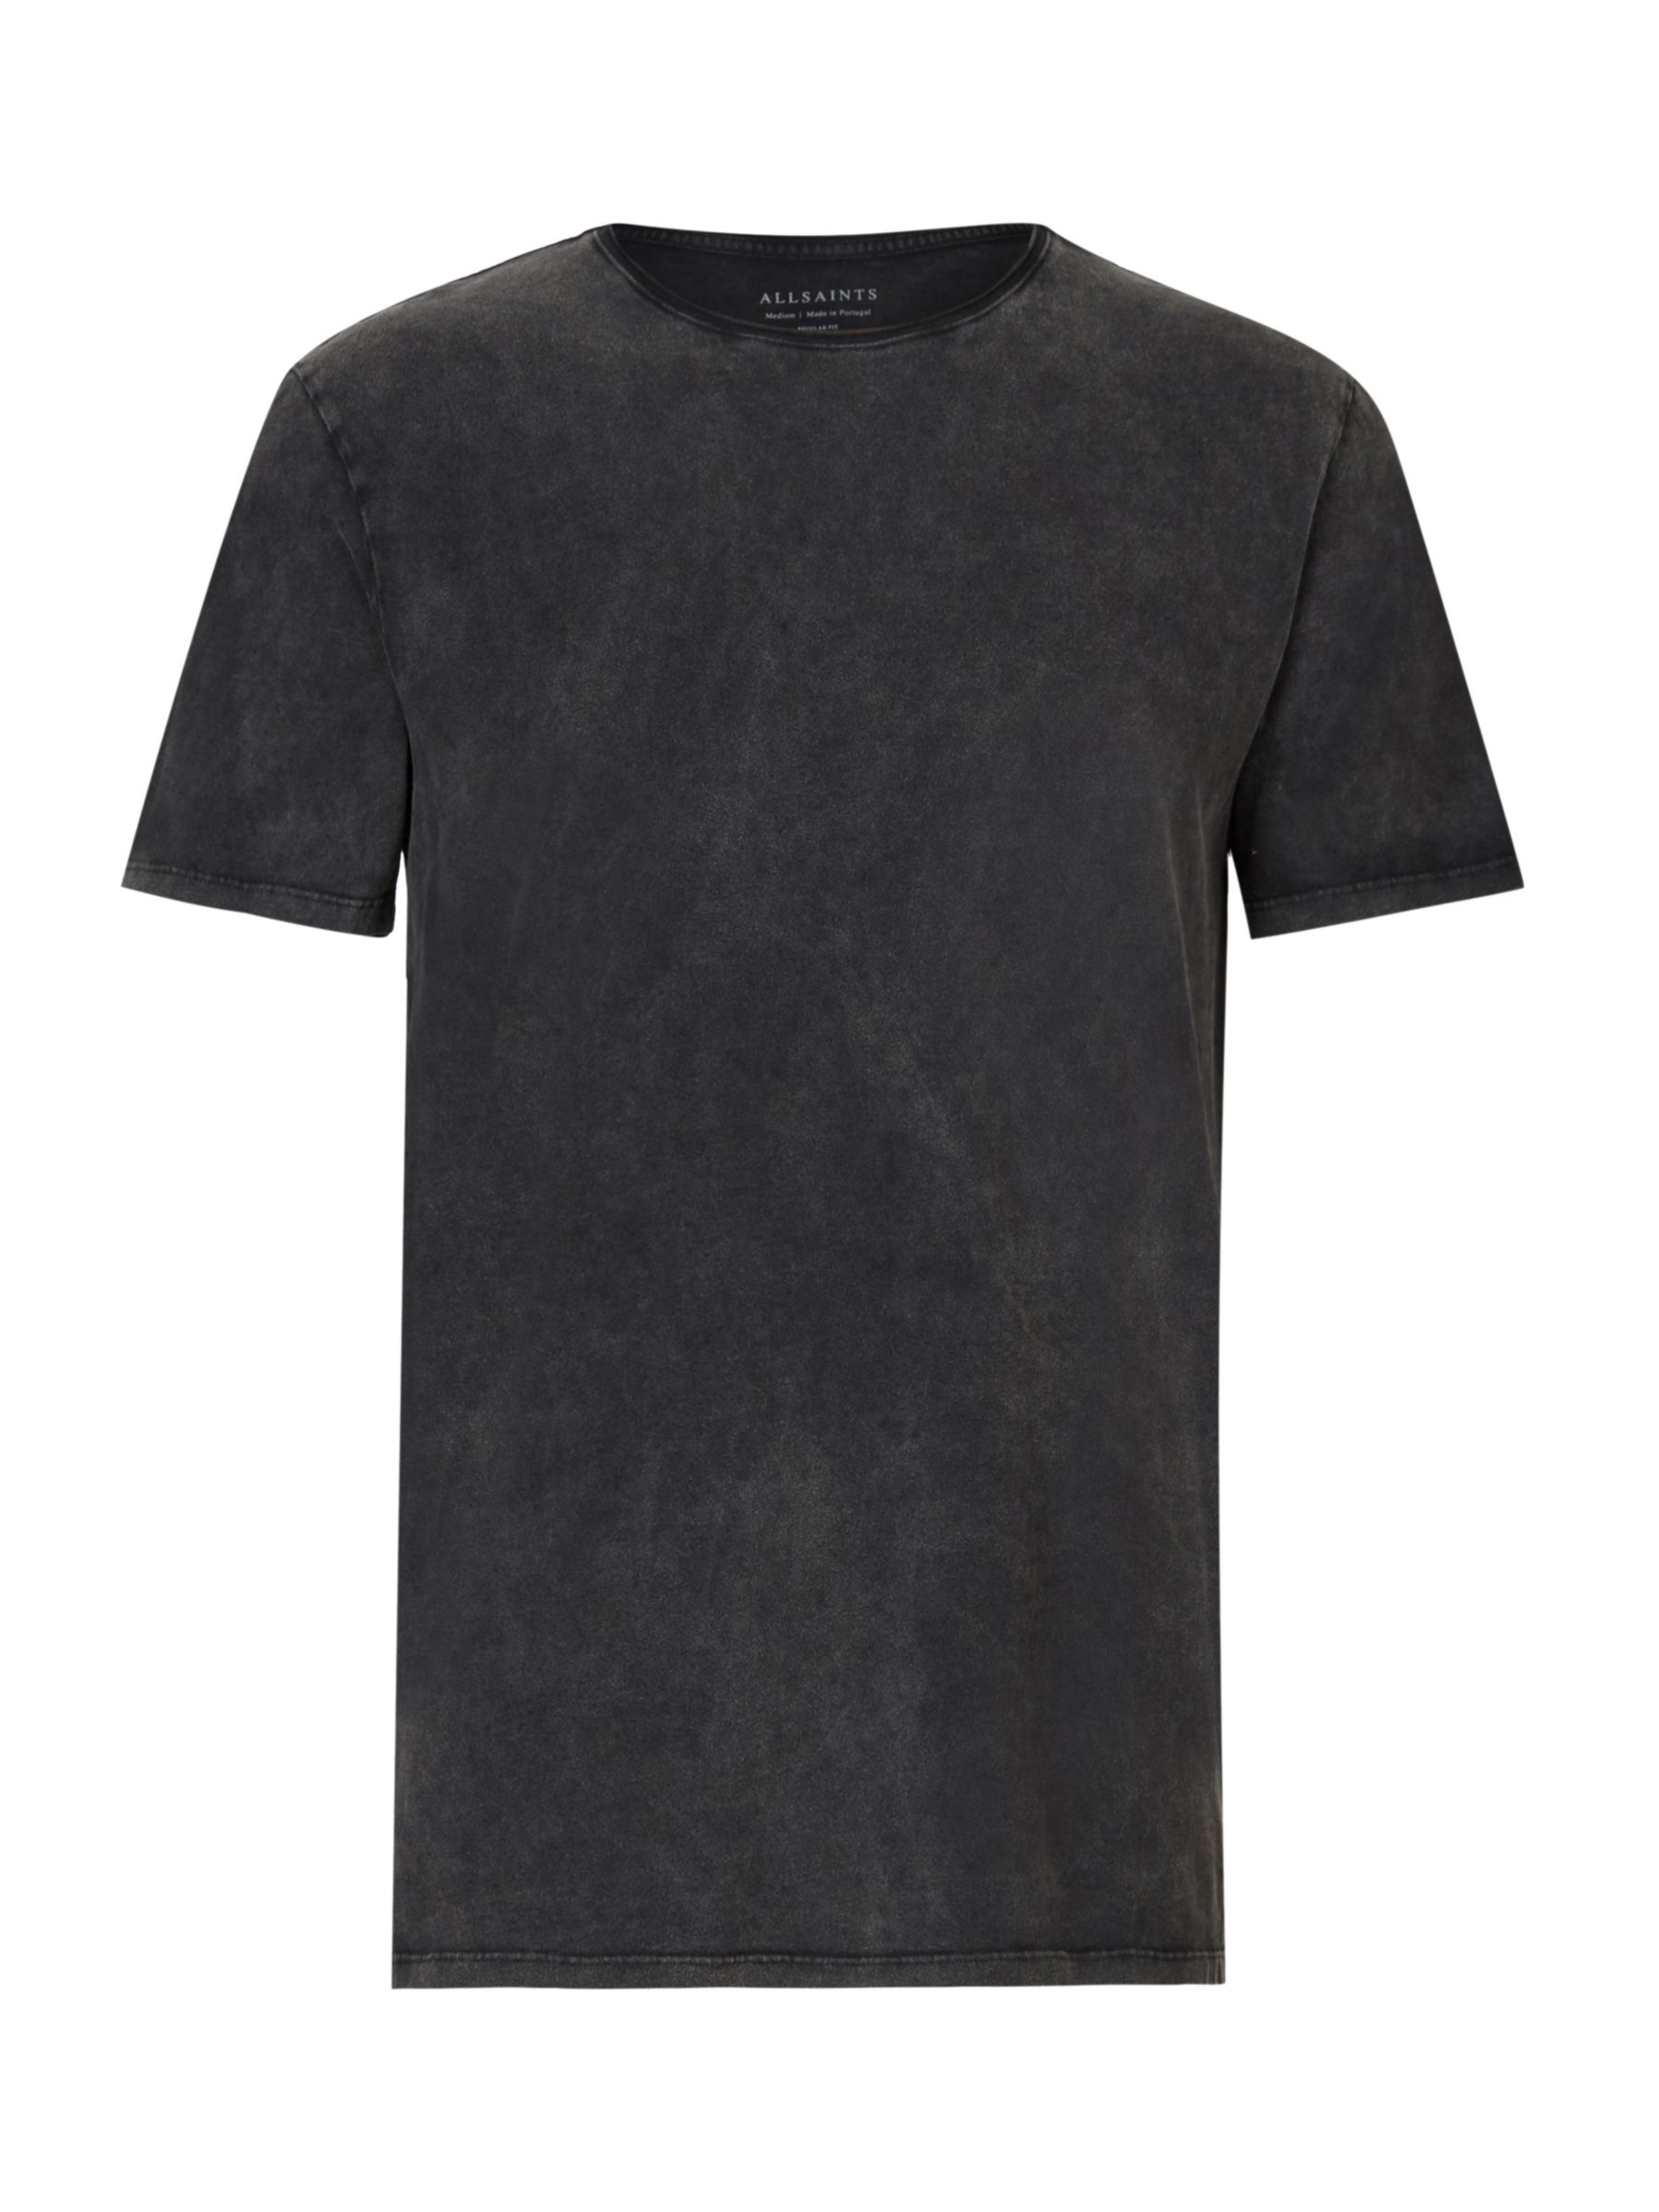 AllSaints Ossage T-Shirt, Soot Black Marl, £35.00